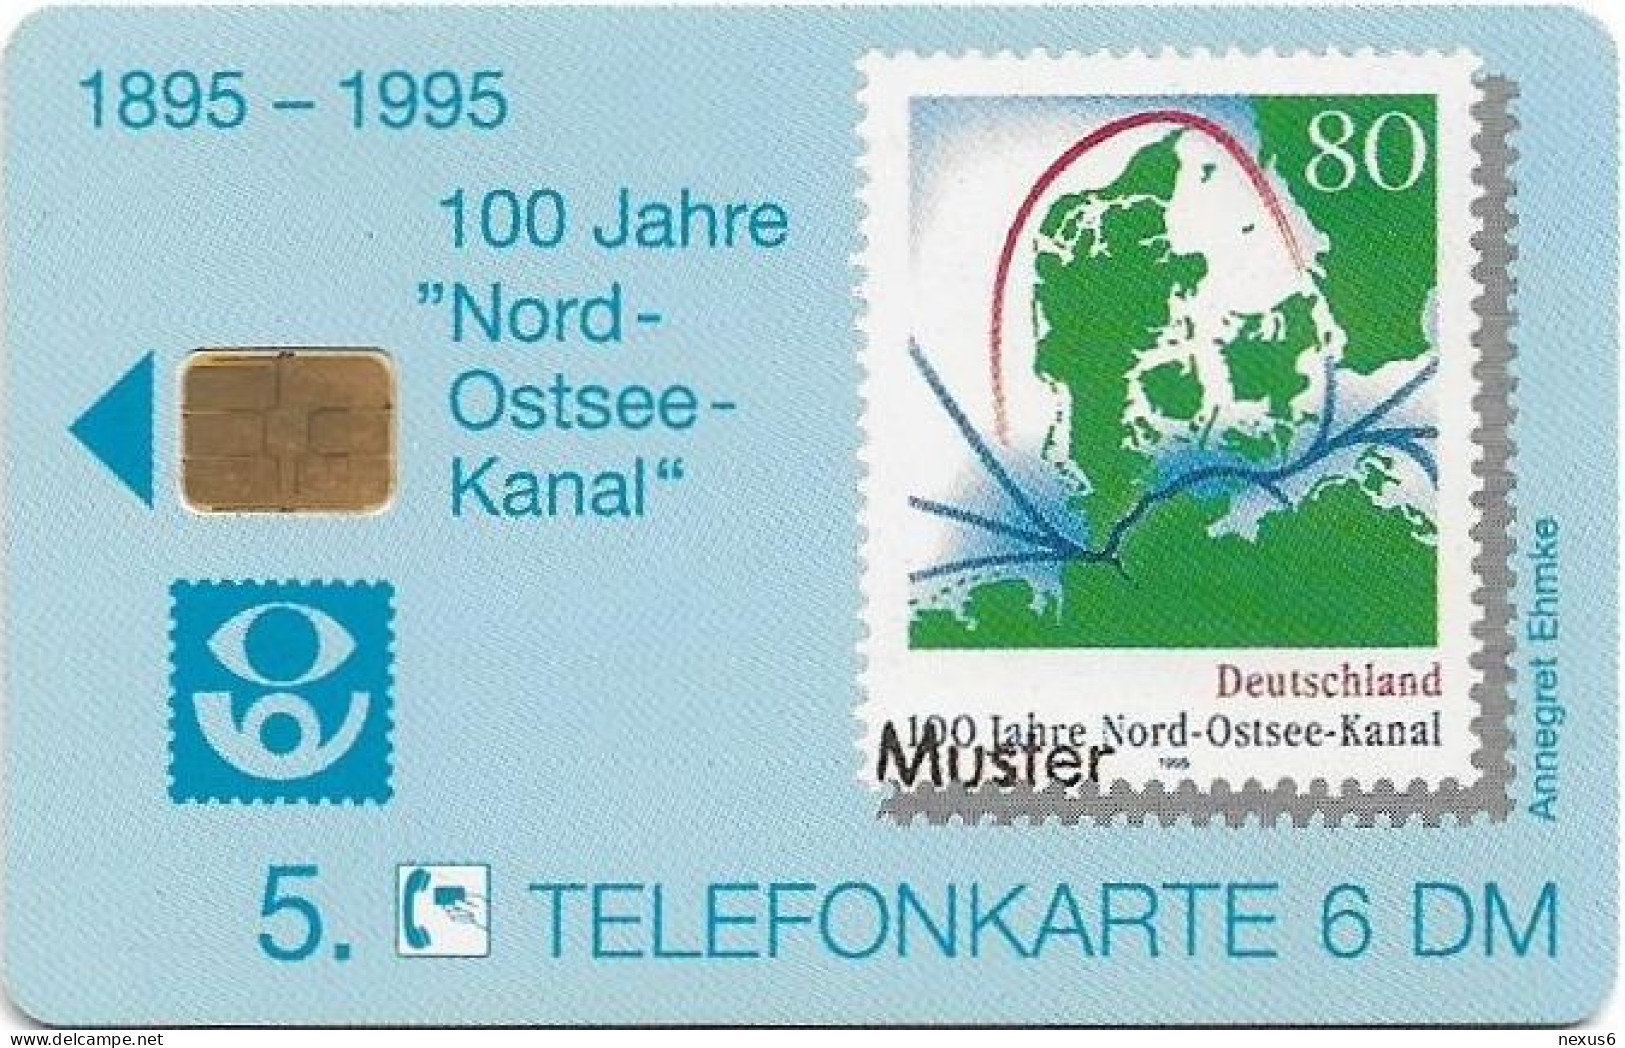 Germany - Kieler Philatelisten-Verein (100 Jahre Nord-Ostsee-Kanal) - O 0994 - 06.1995, 6DM, 1.000ex, Mint - O-Reeksen : Klantenreeksen